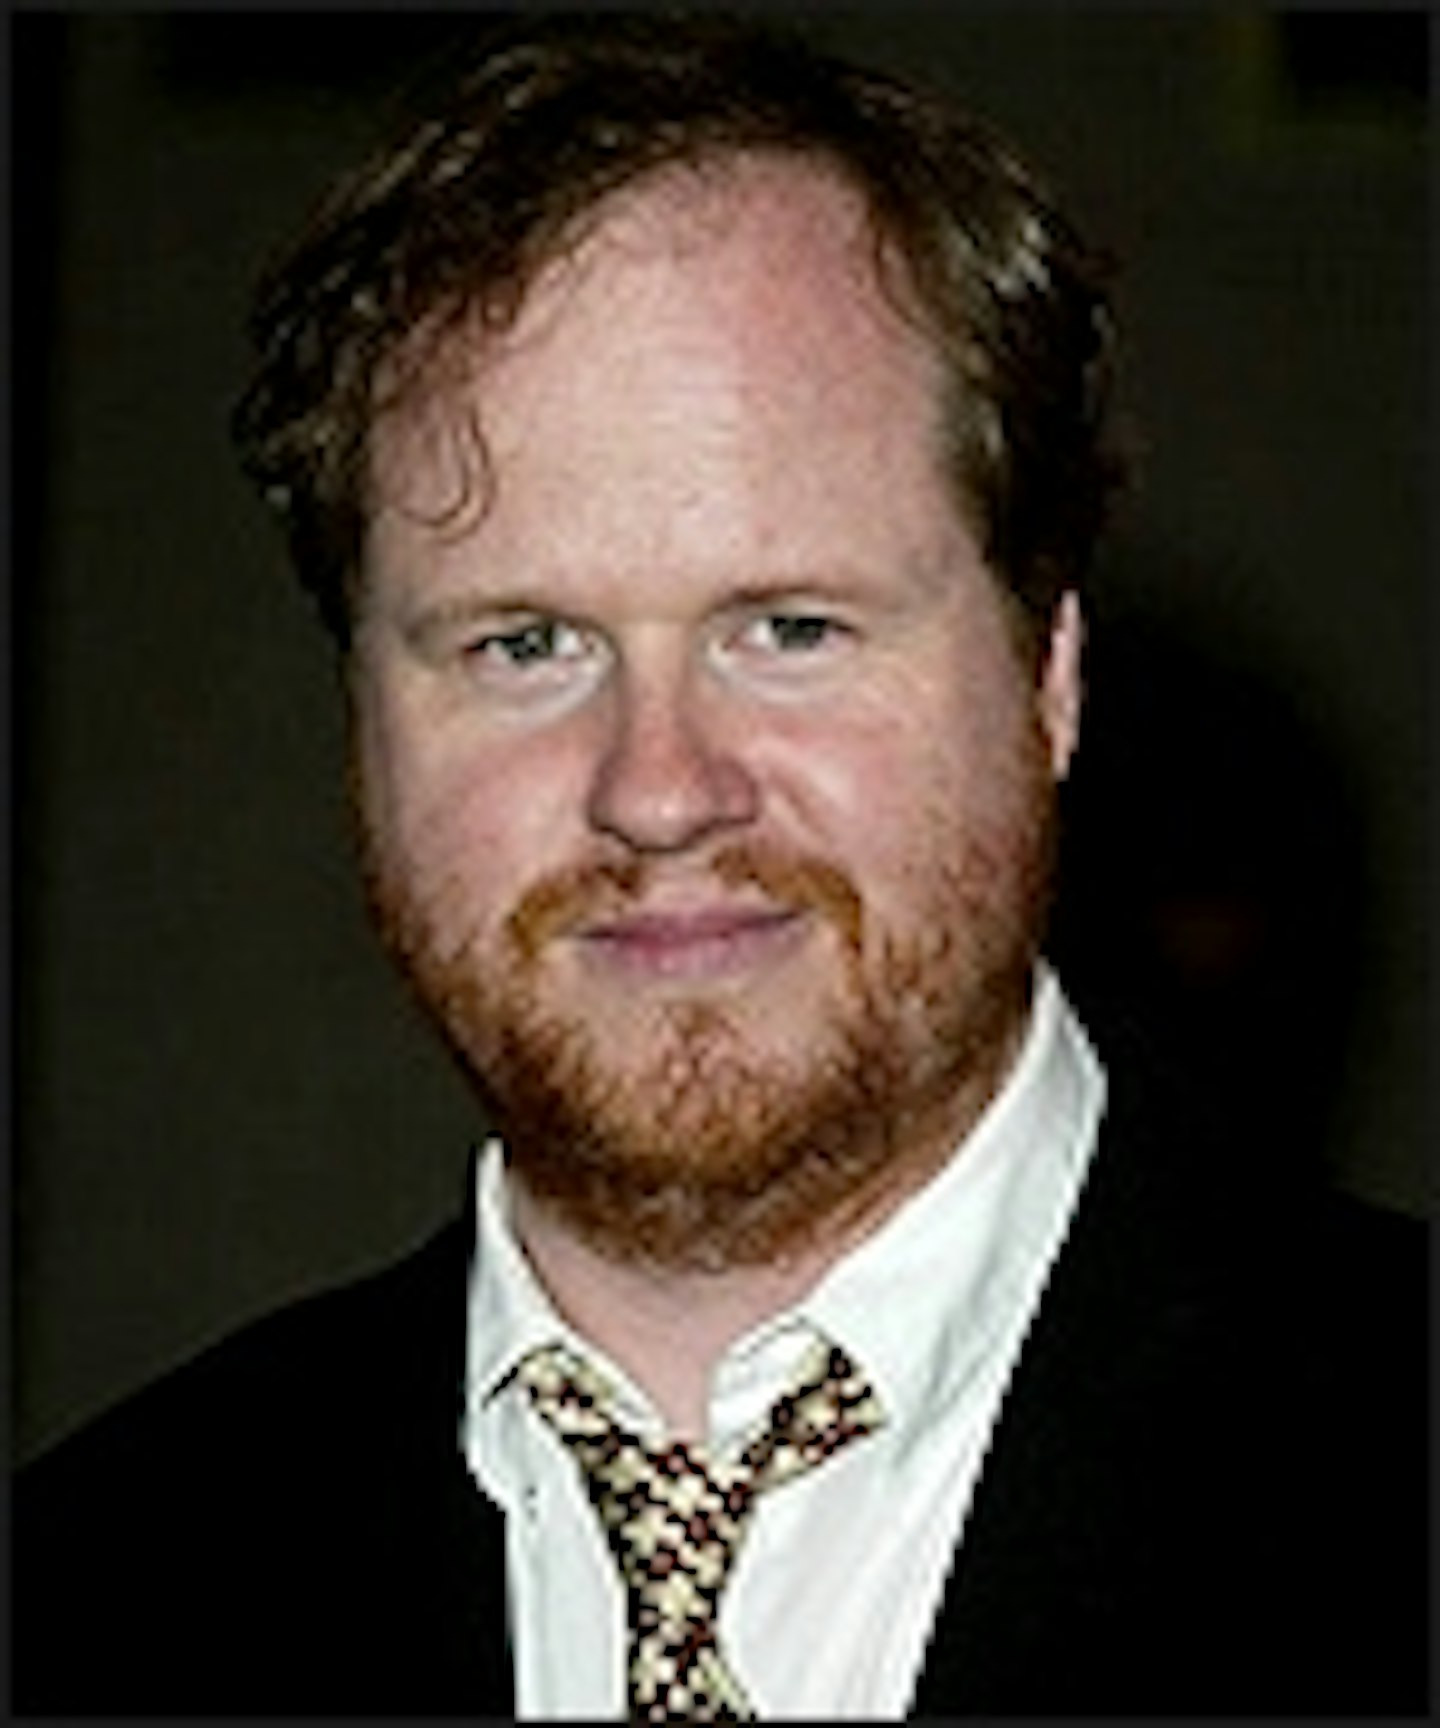 Joss Whedon Directing The Avengers?